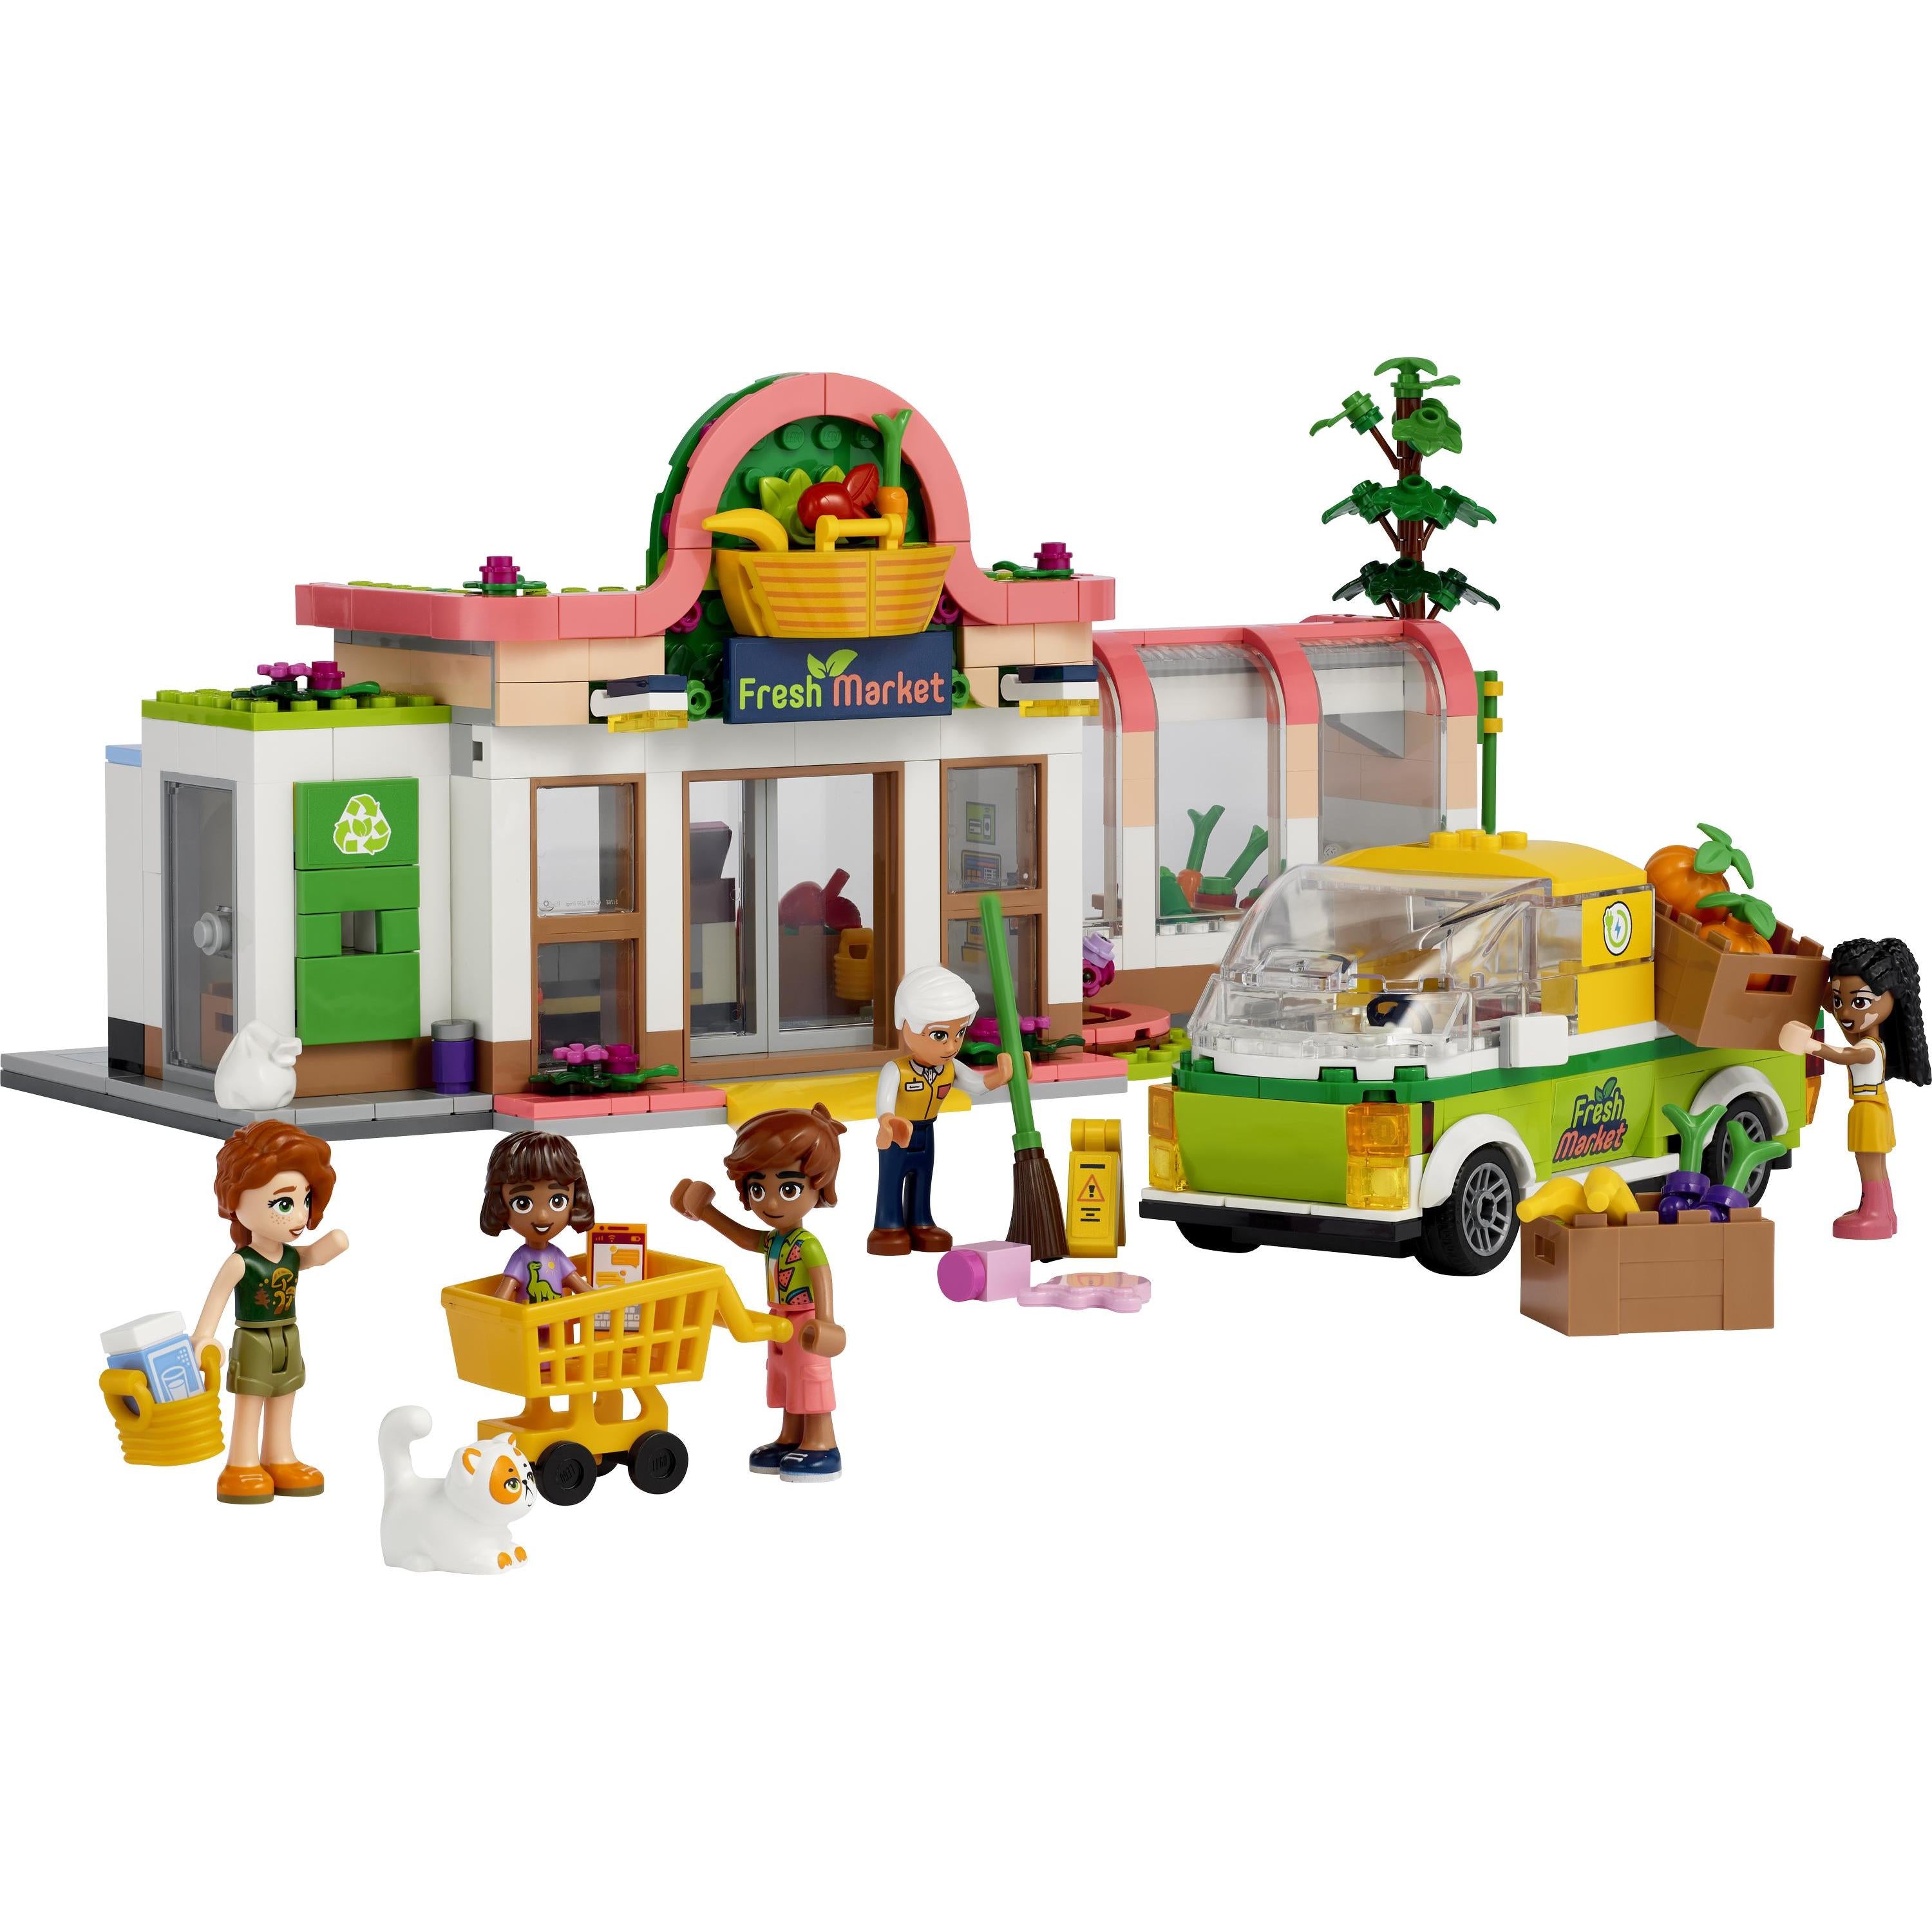 LEGO® Friends Heartlake City Organic Grocery Store | 41729